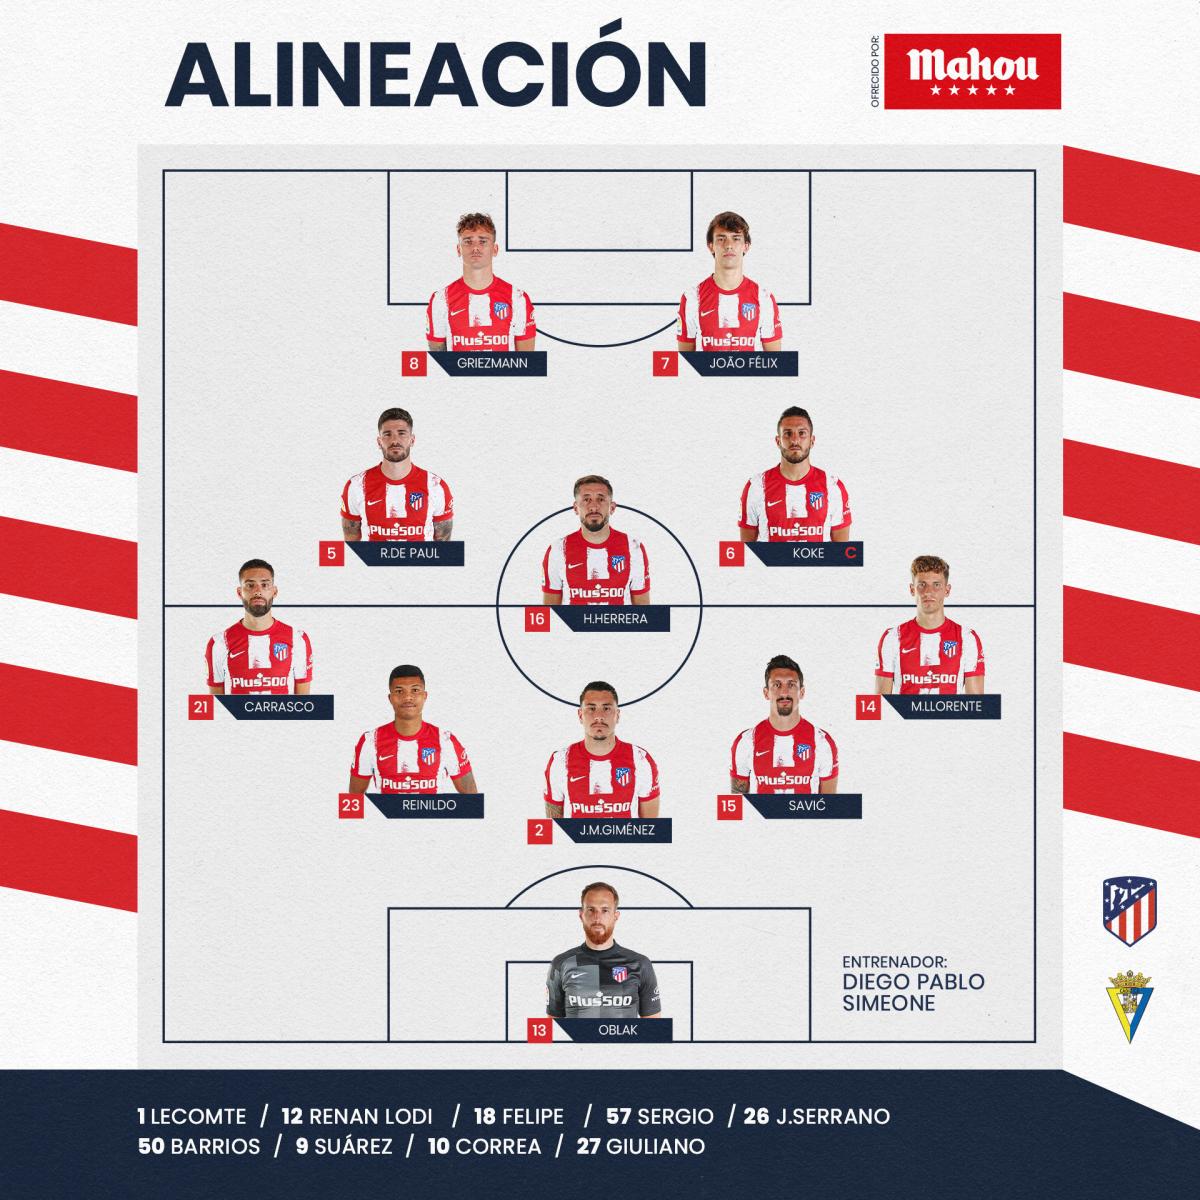 Twitter: Atlético de Madrid oficial